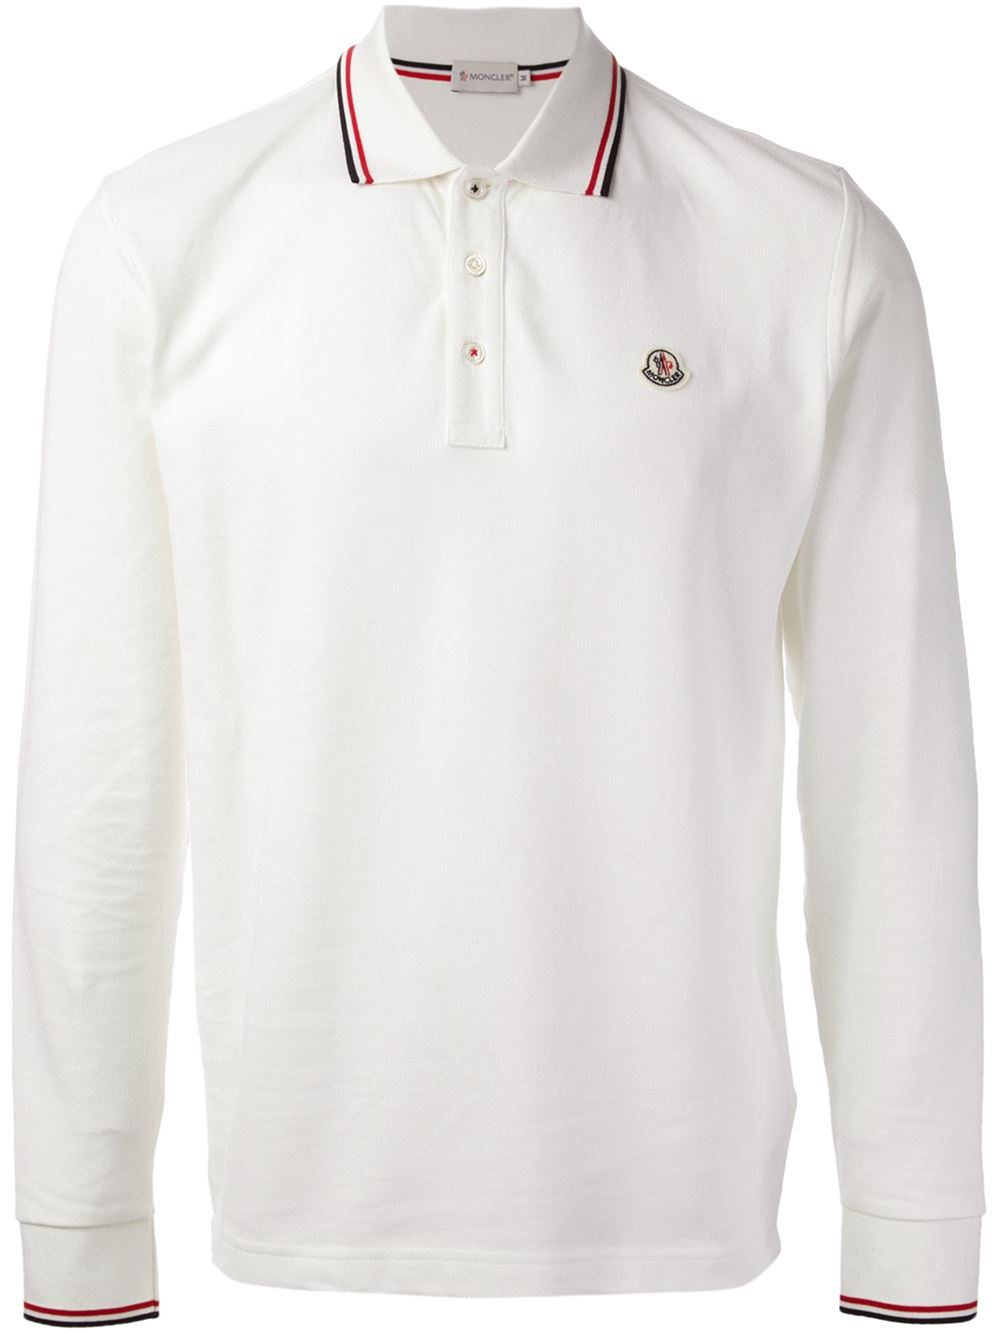 Lyst - Moncler Long Sleeve Polo Shirt in White for Men